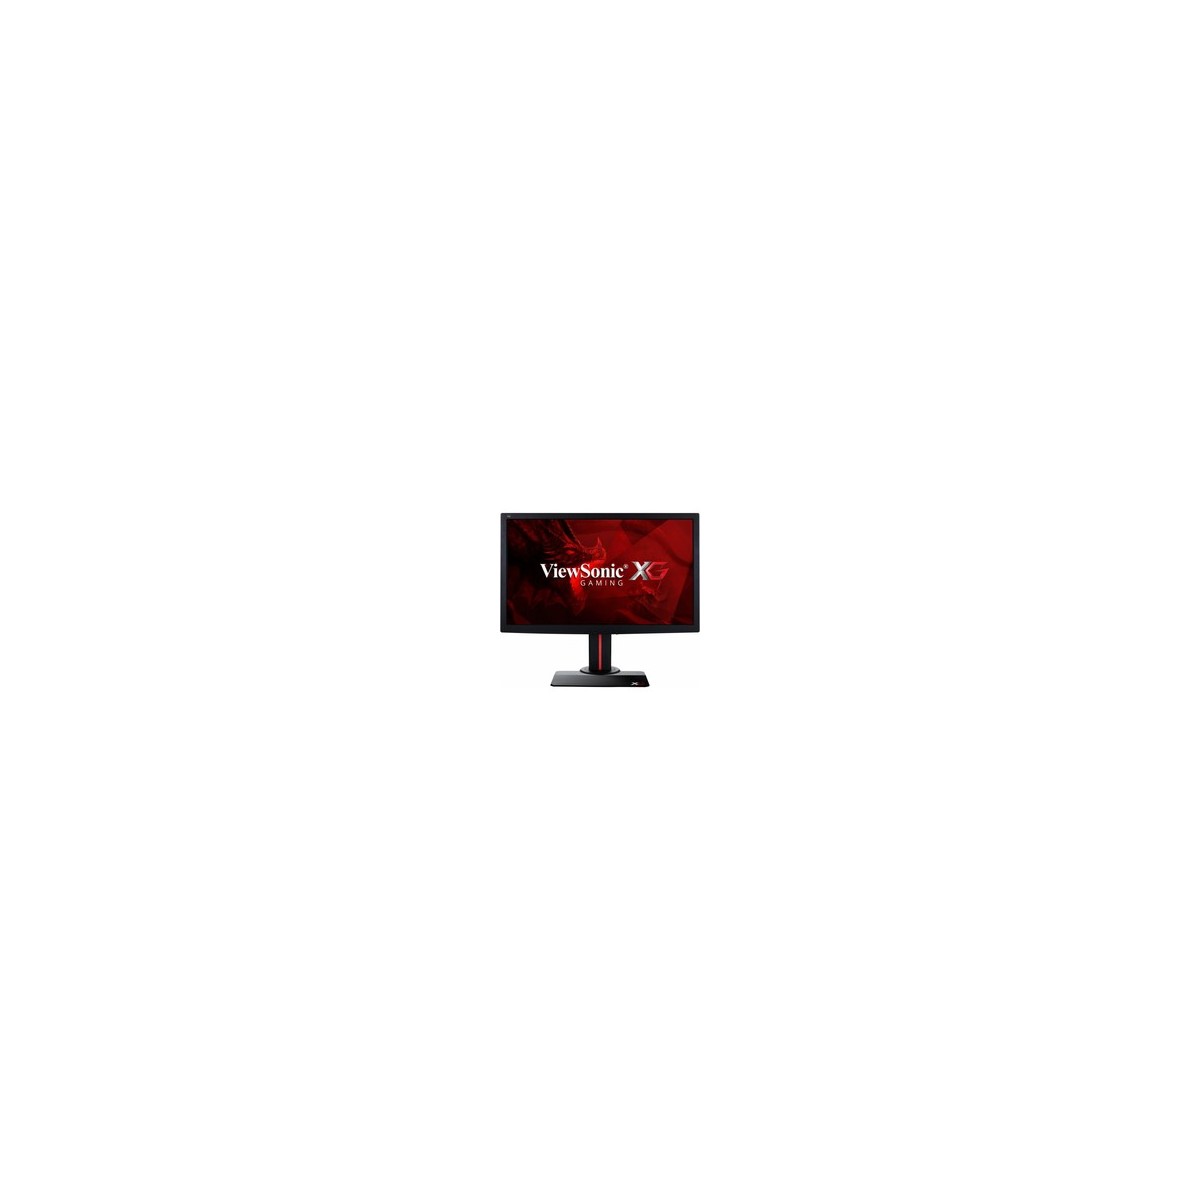 ViewSonic X Series XG2702 - 68.6 cm (27) - 1920 x 1080 pixels - Full HD - LCD - 1 ms - Black